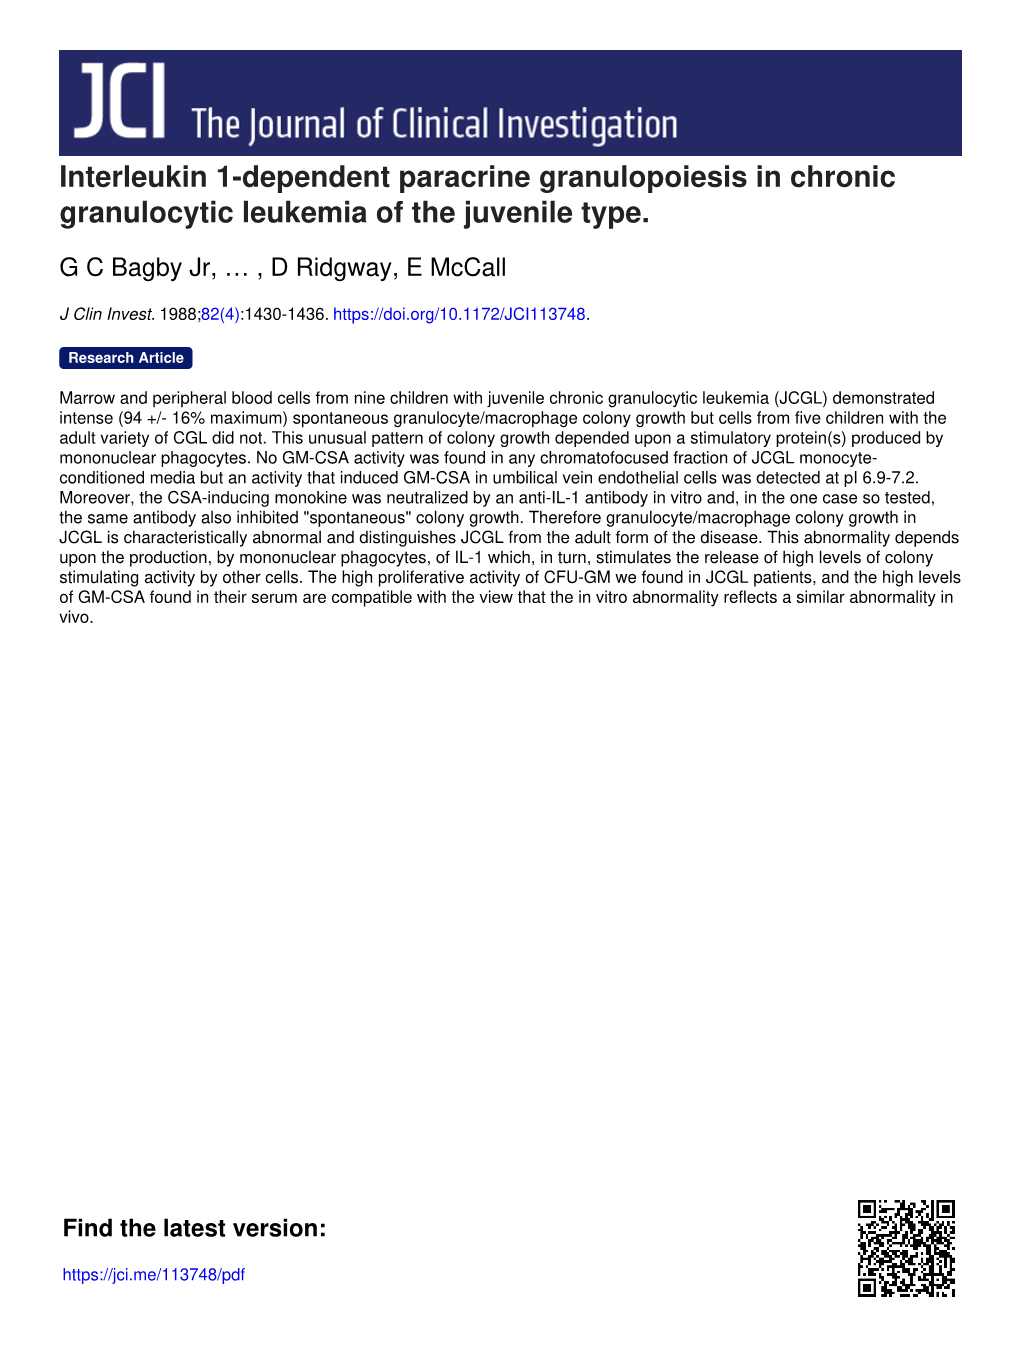 Interleukin 1-Dependent Paracrine Granulopoiesis in Chronic Granulocytic Leukemia of the Juvenile Type